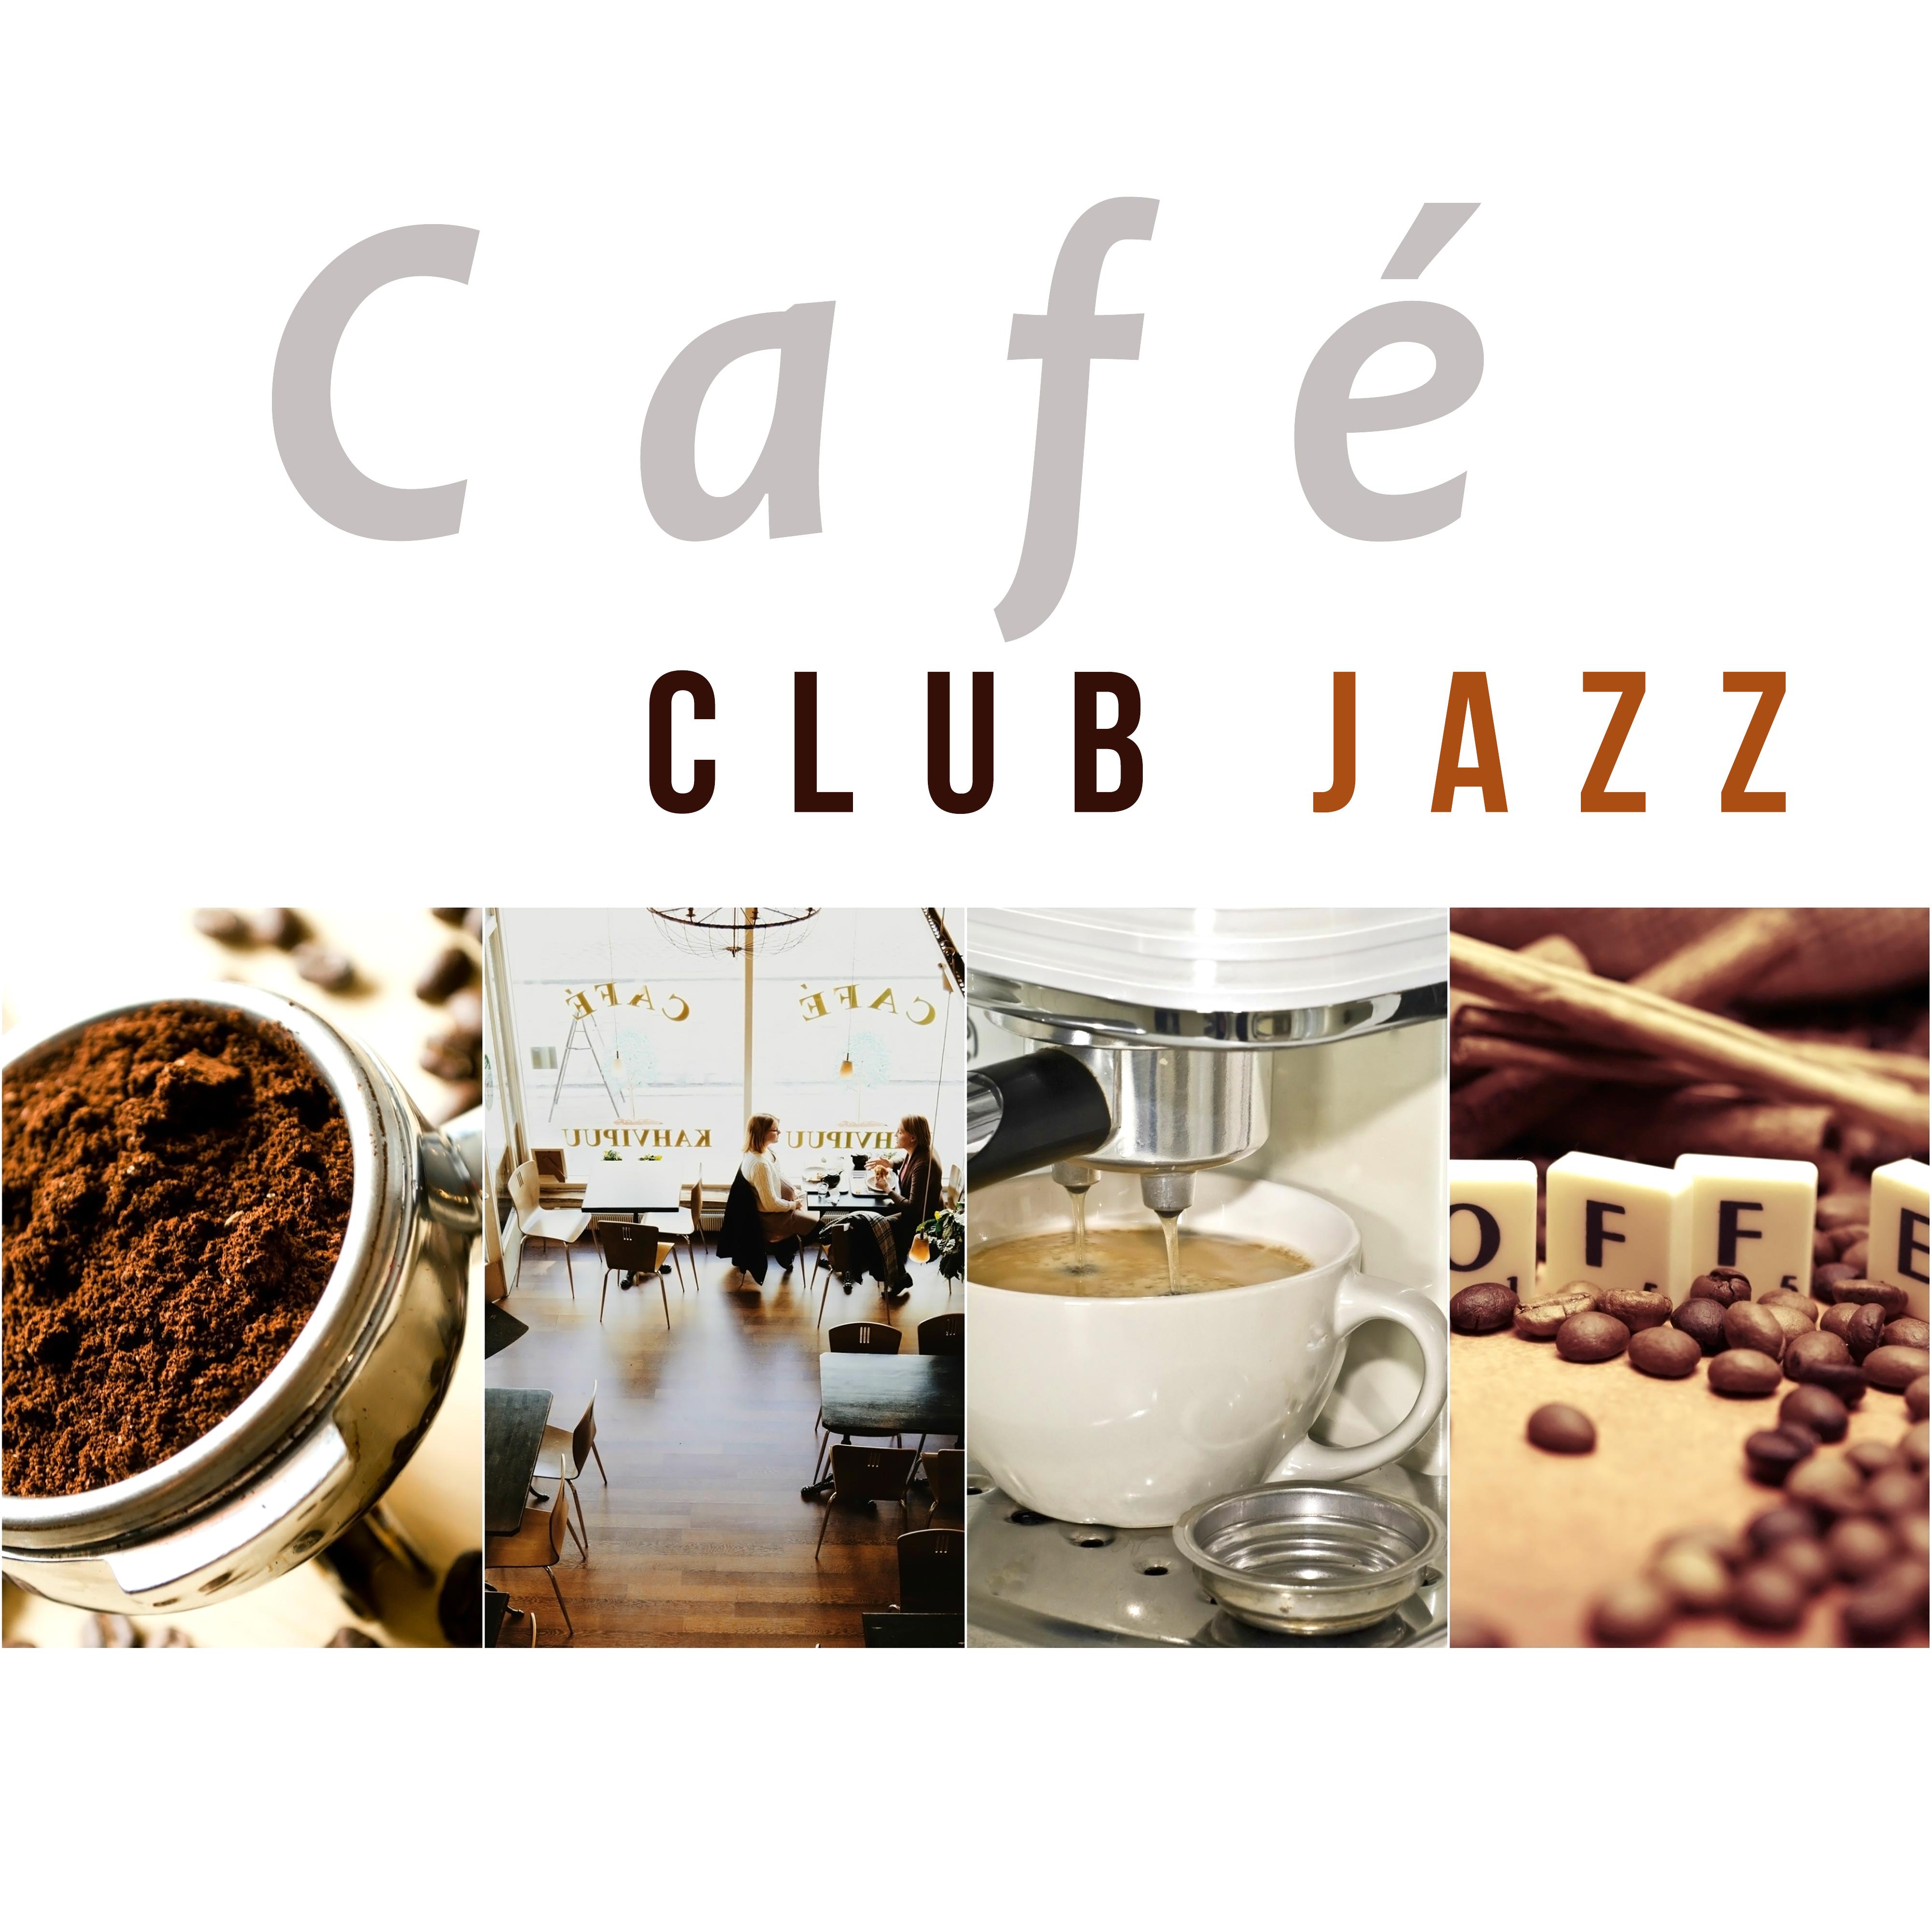 Cafe Club Jazz  Smooth Tones of Jazz,  Cafe Music Background, Jazz for Cafe  Restaurant, Guitar Piano Jazz Music